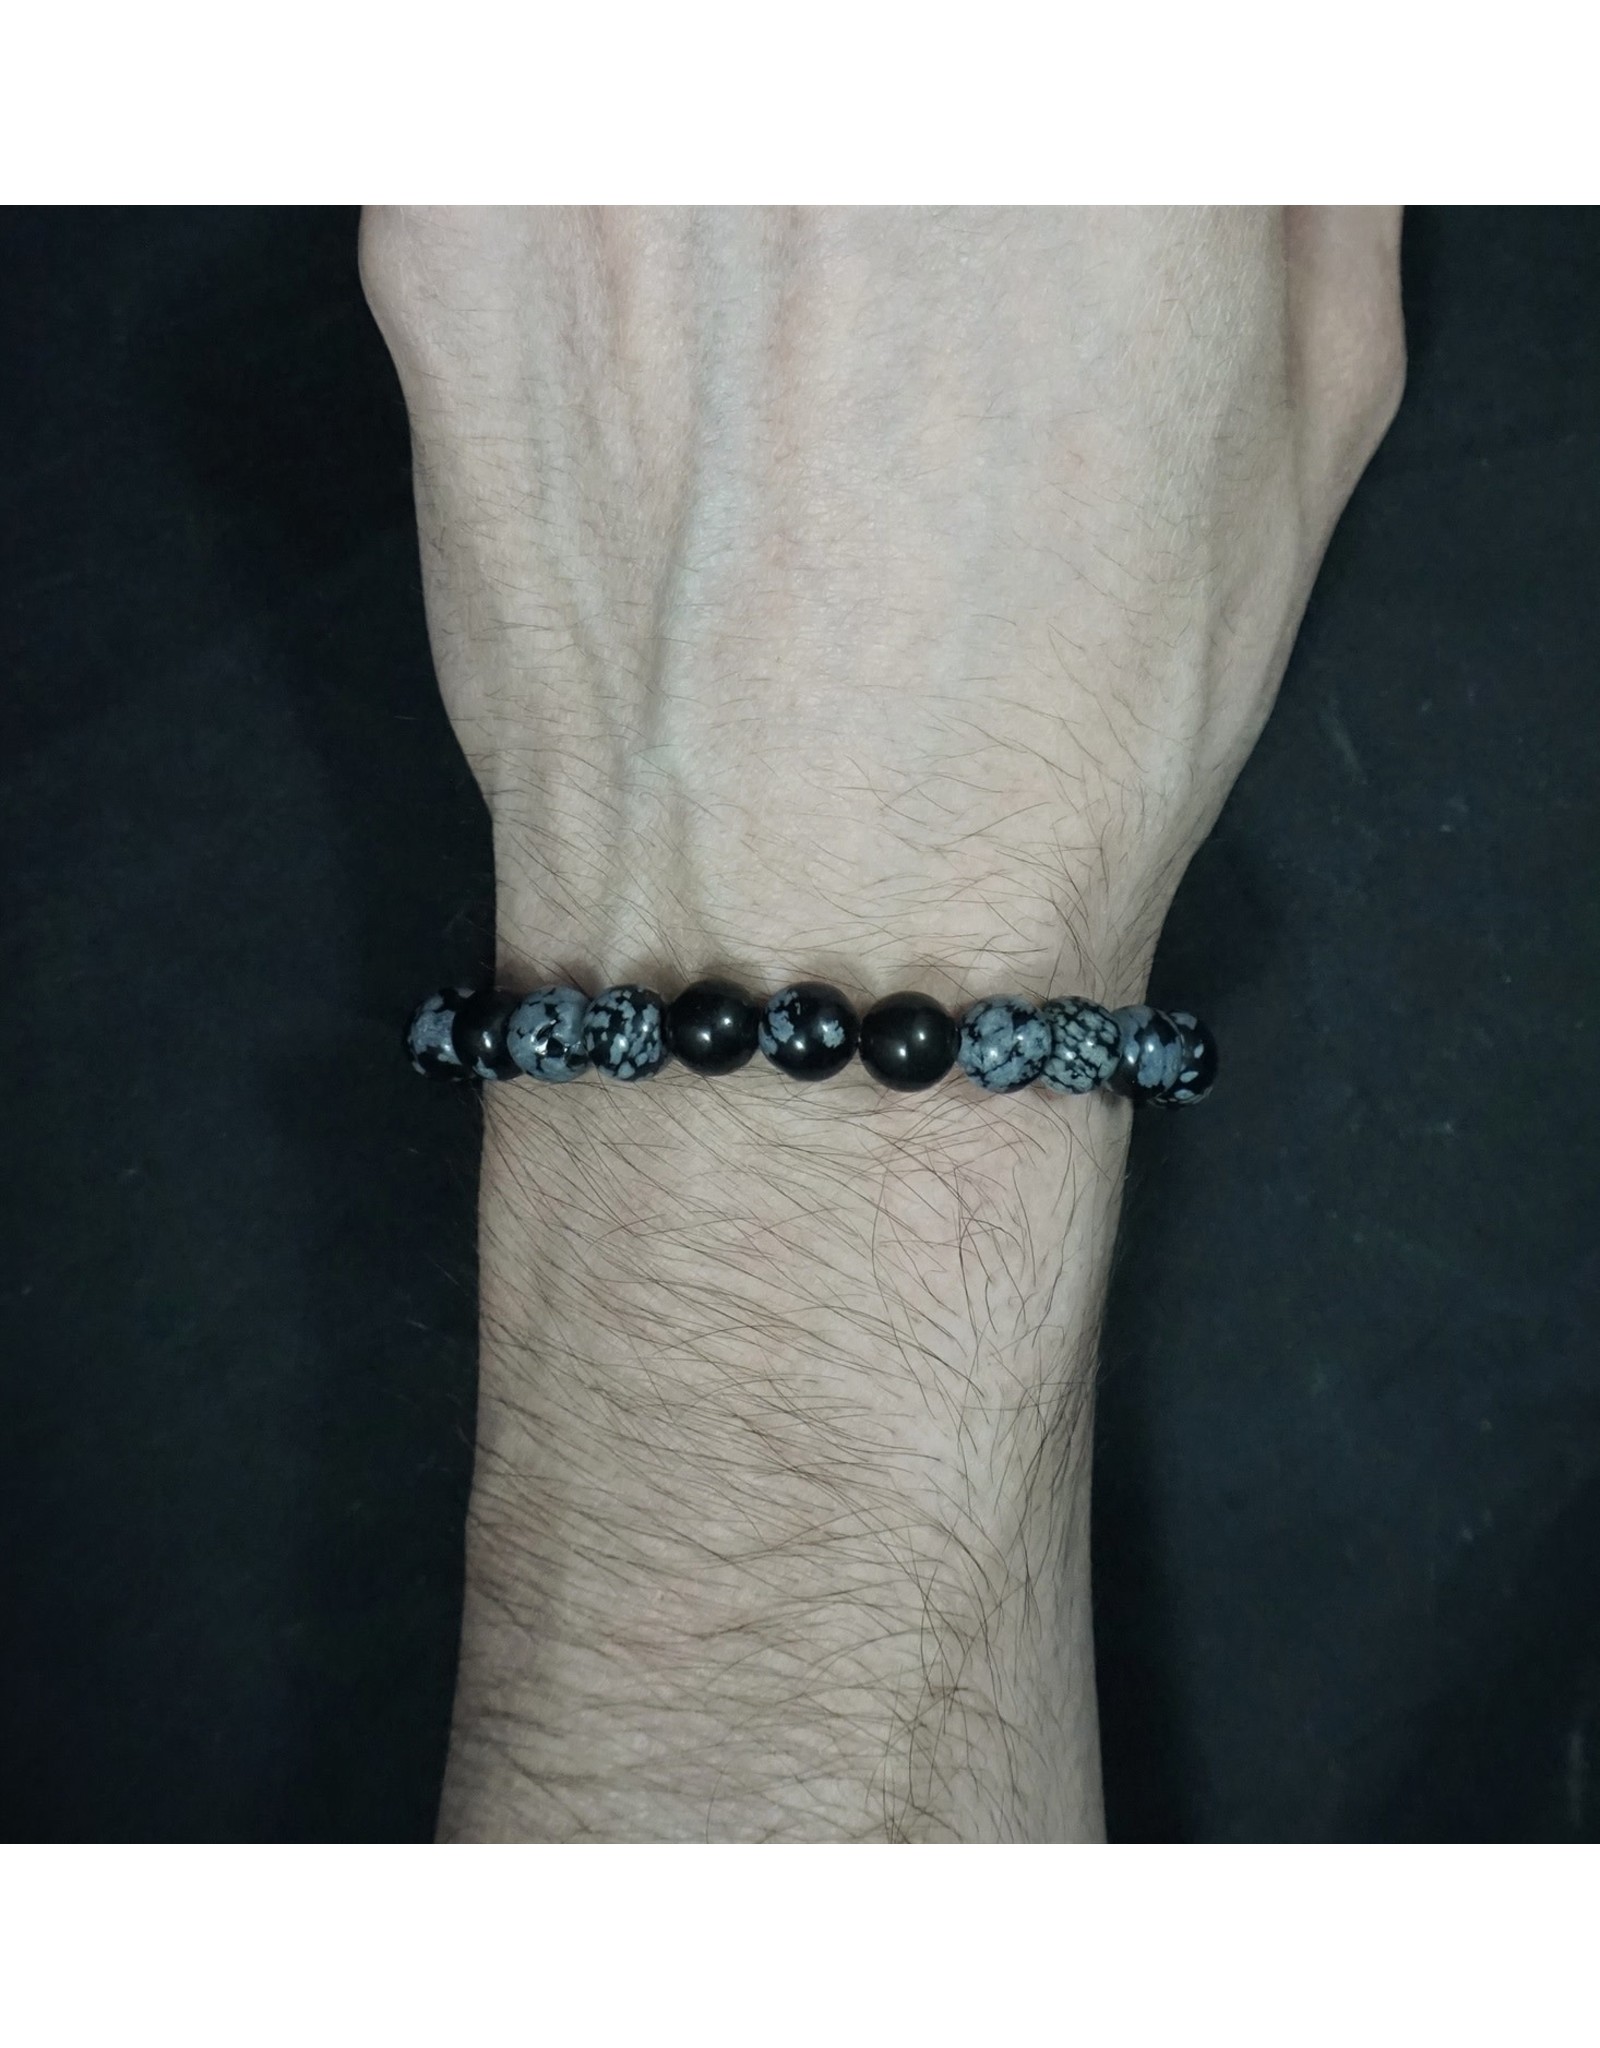 Elastic Bracelet 8mm Round Beads - Snowflake Obsidian